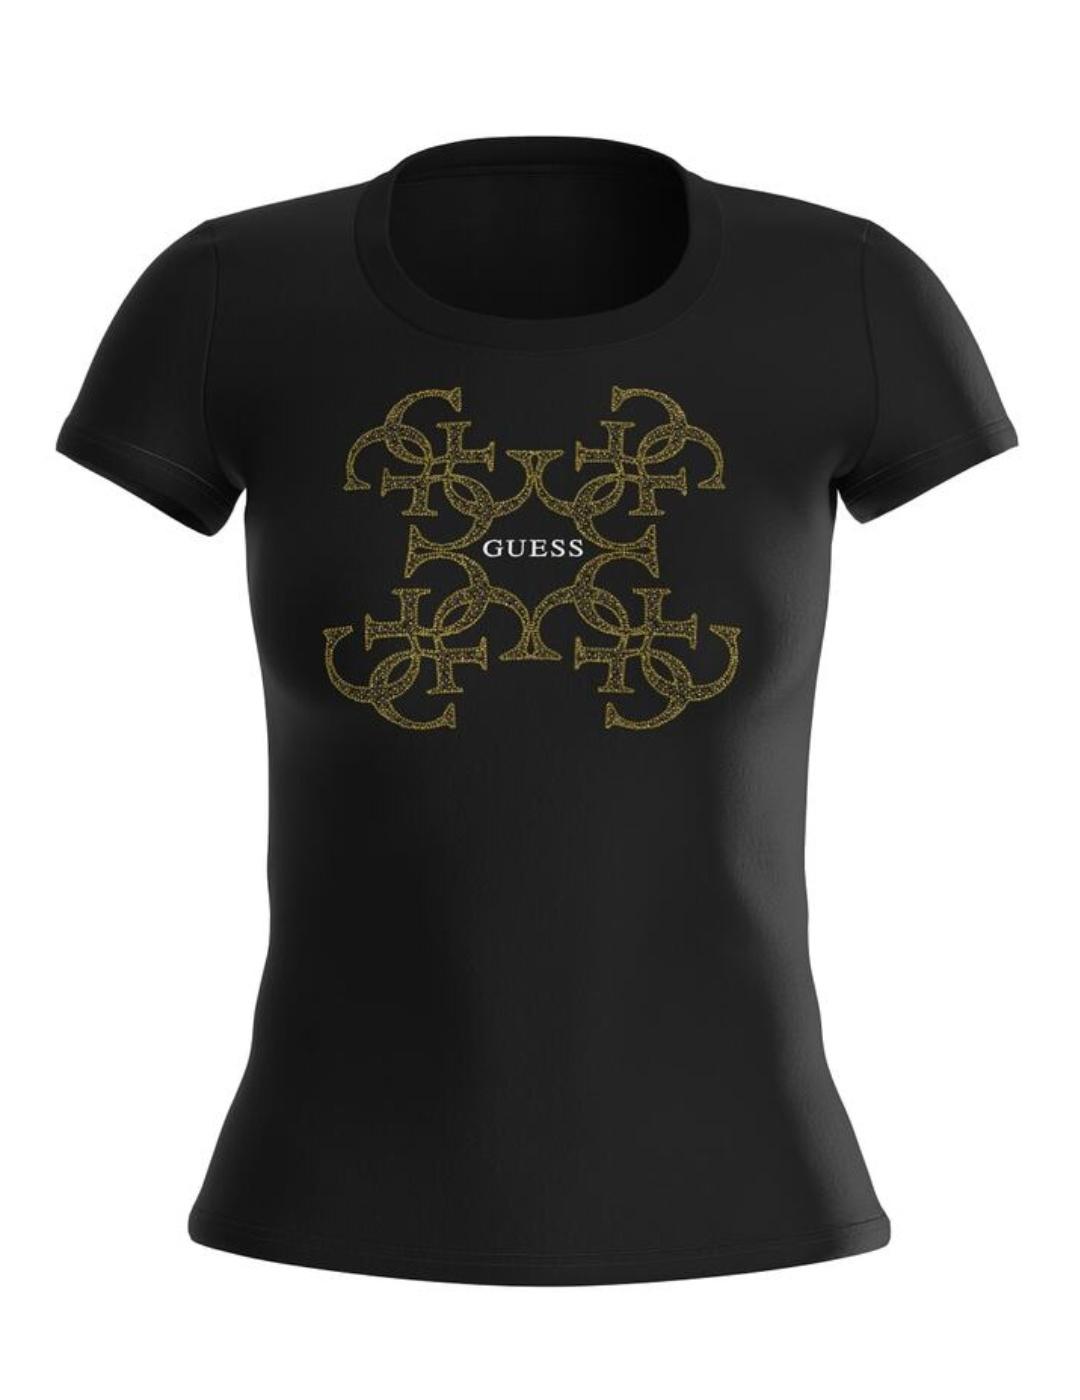 Camiseta Guess 4G Logo negro  ajustadamanga corta para mujer